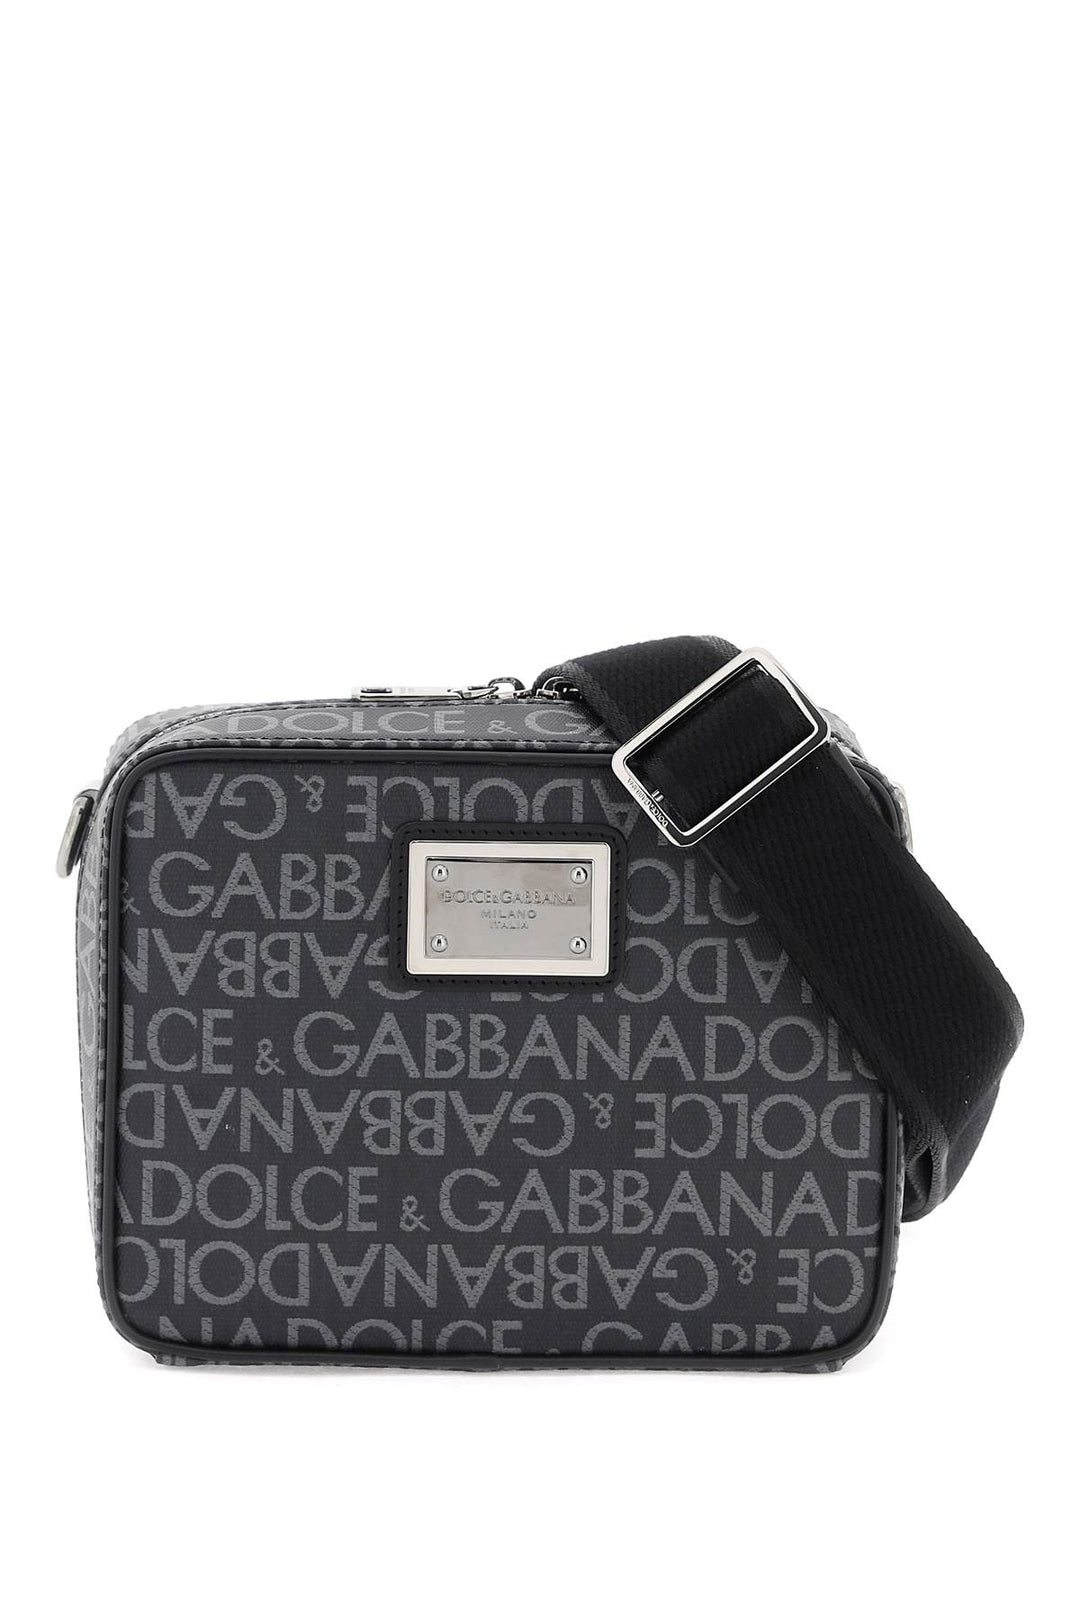 Dolce & Gabbana Coated Jacquard Messenger Bag   Nero